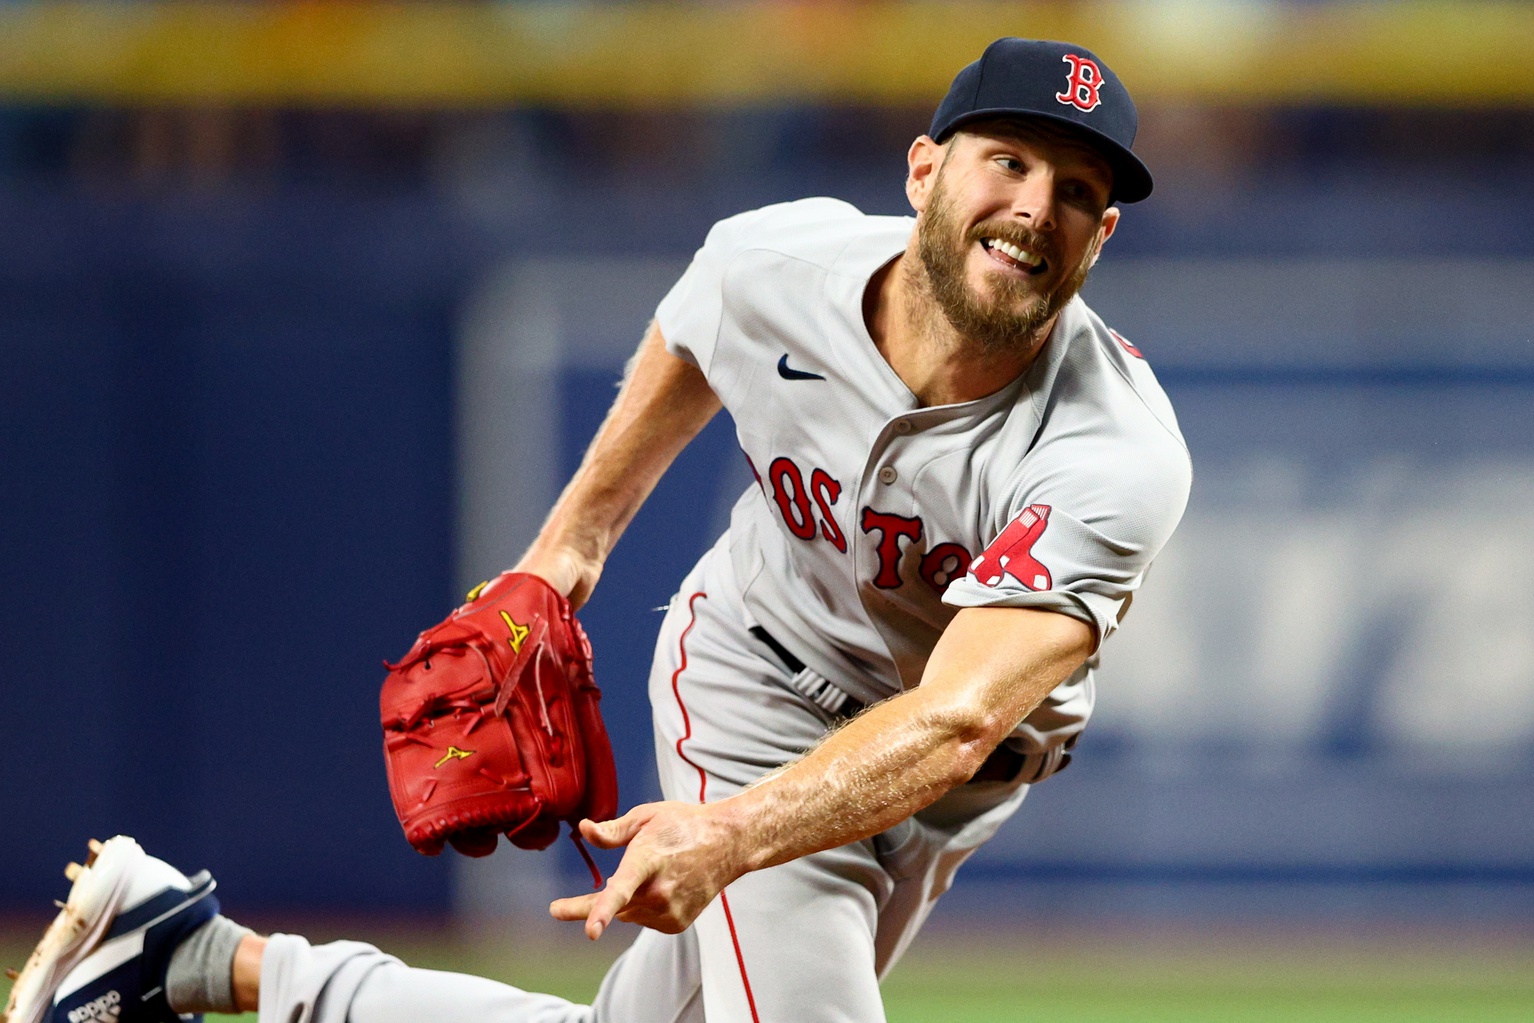 Boston Red Sox ace Chris Sale nearing return from rib injury